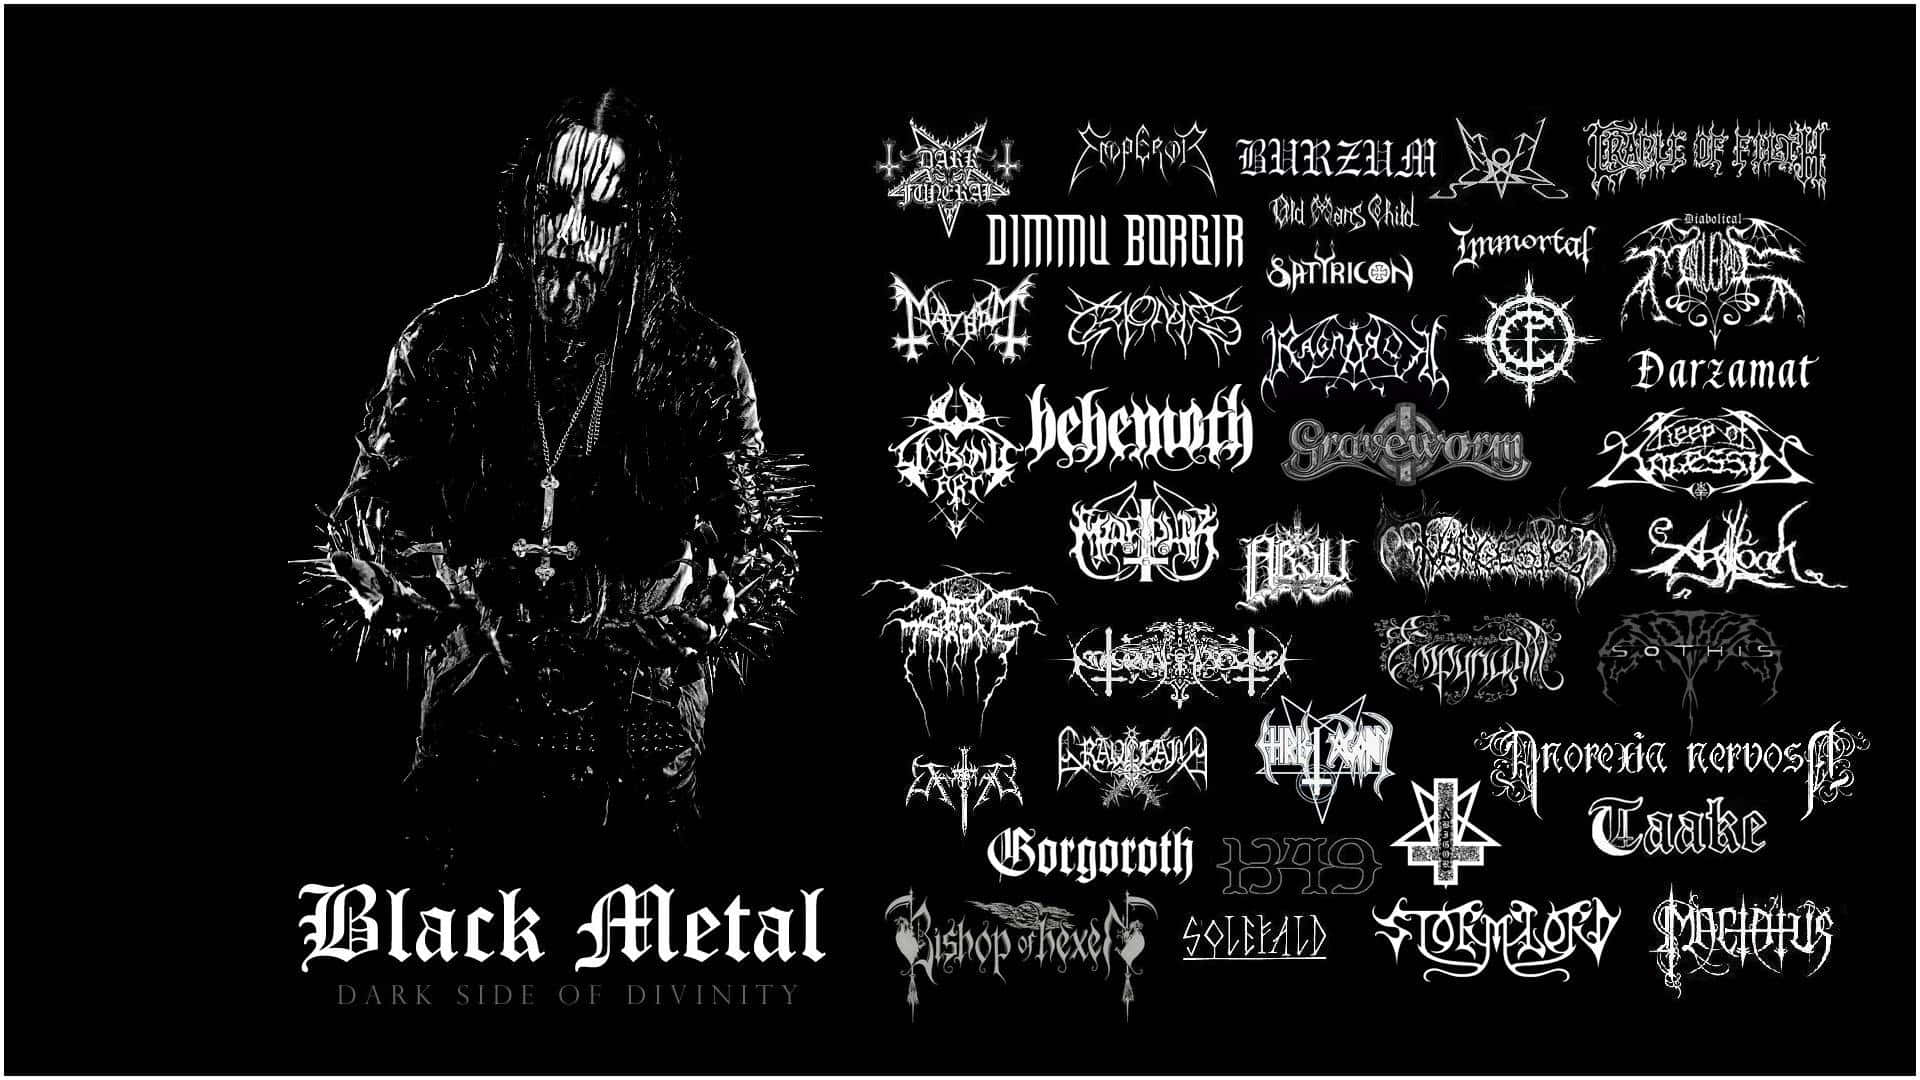 Ghost Band Black Metal Bands Wallpaper